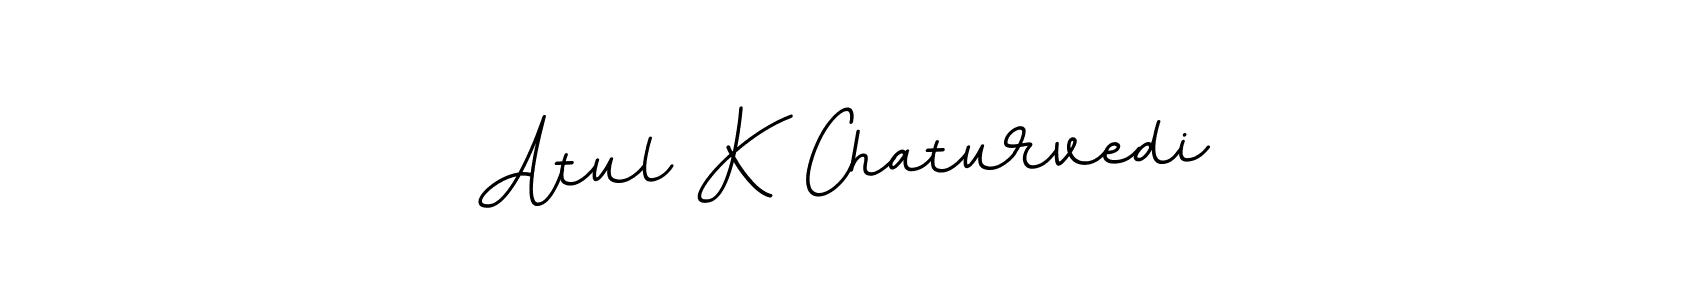 How to Draw Atul K Chaturvedi signature style? BallpointsItalic-DORy9 is a latest design signature styles for name Atul K Chaturvedi. Atul K Chaturvedi signature style 11 images and pictures png